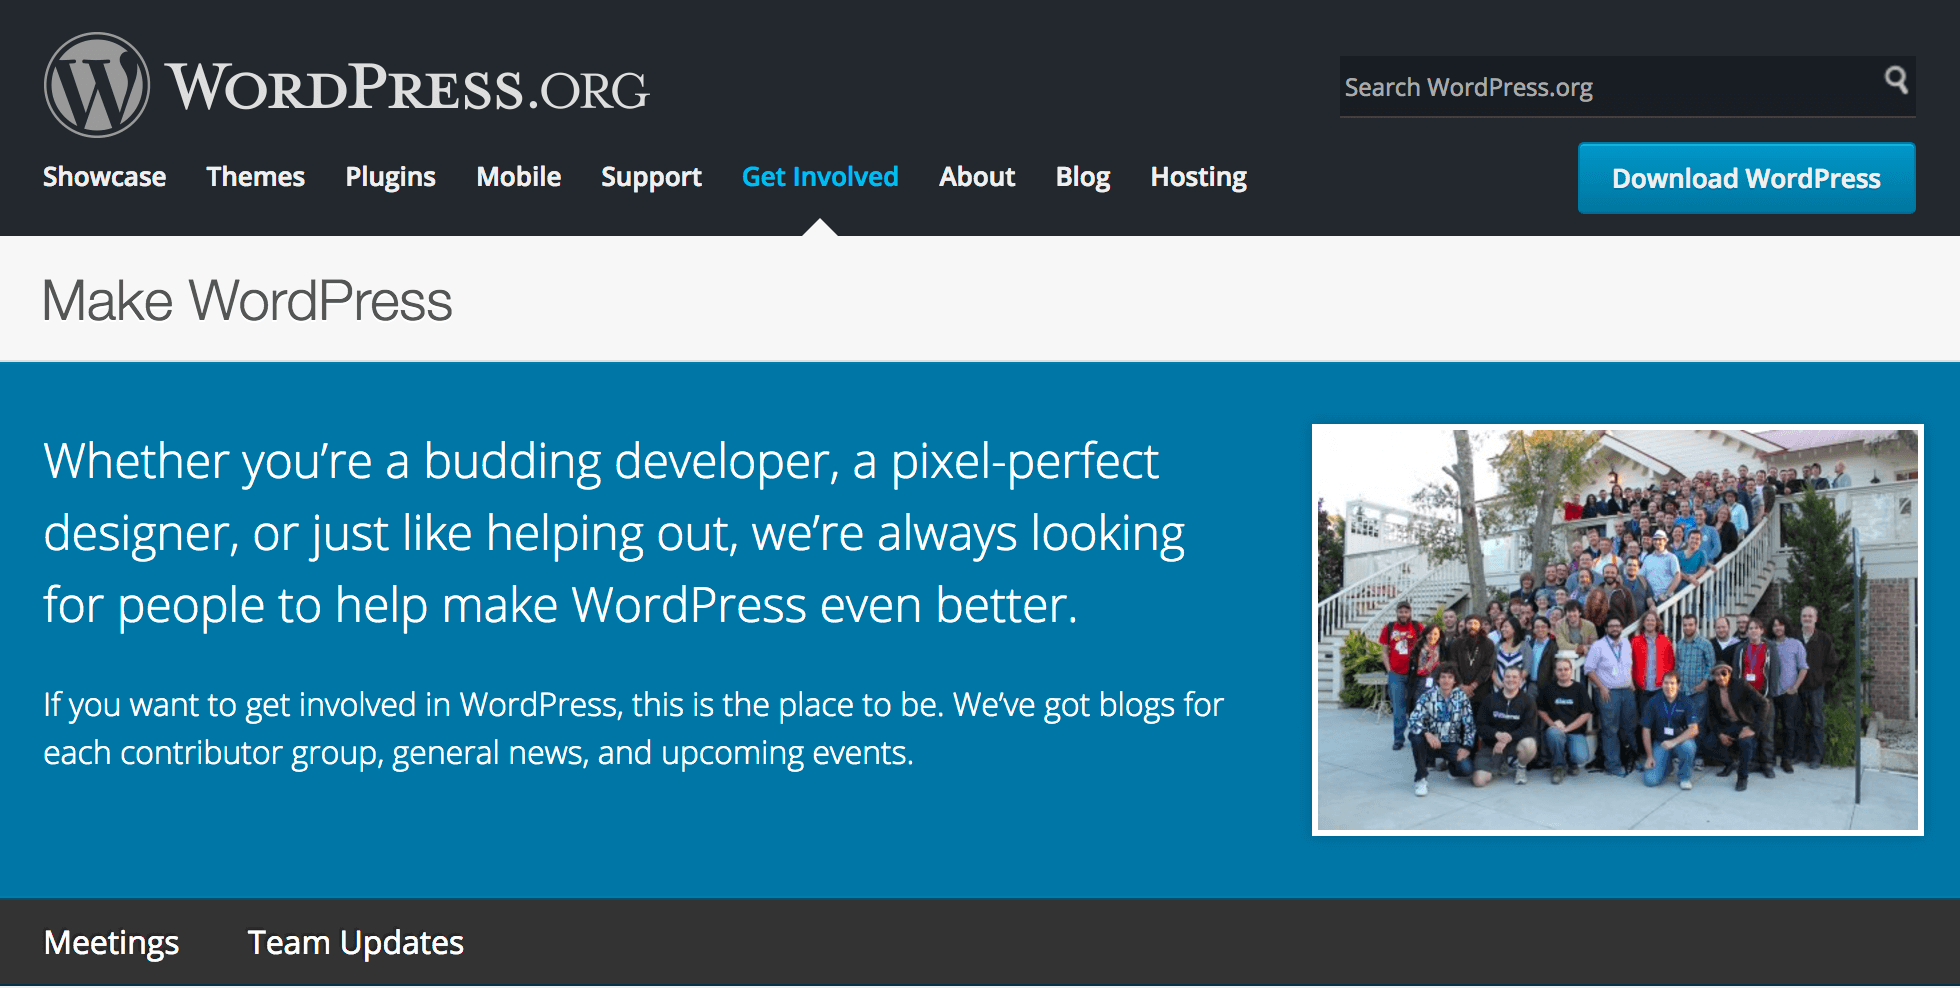 Make WordPress